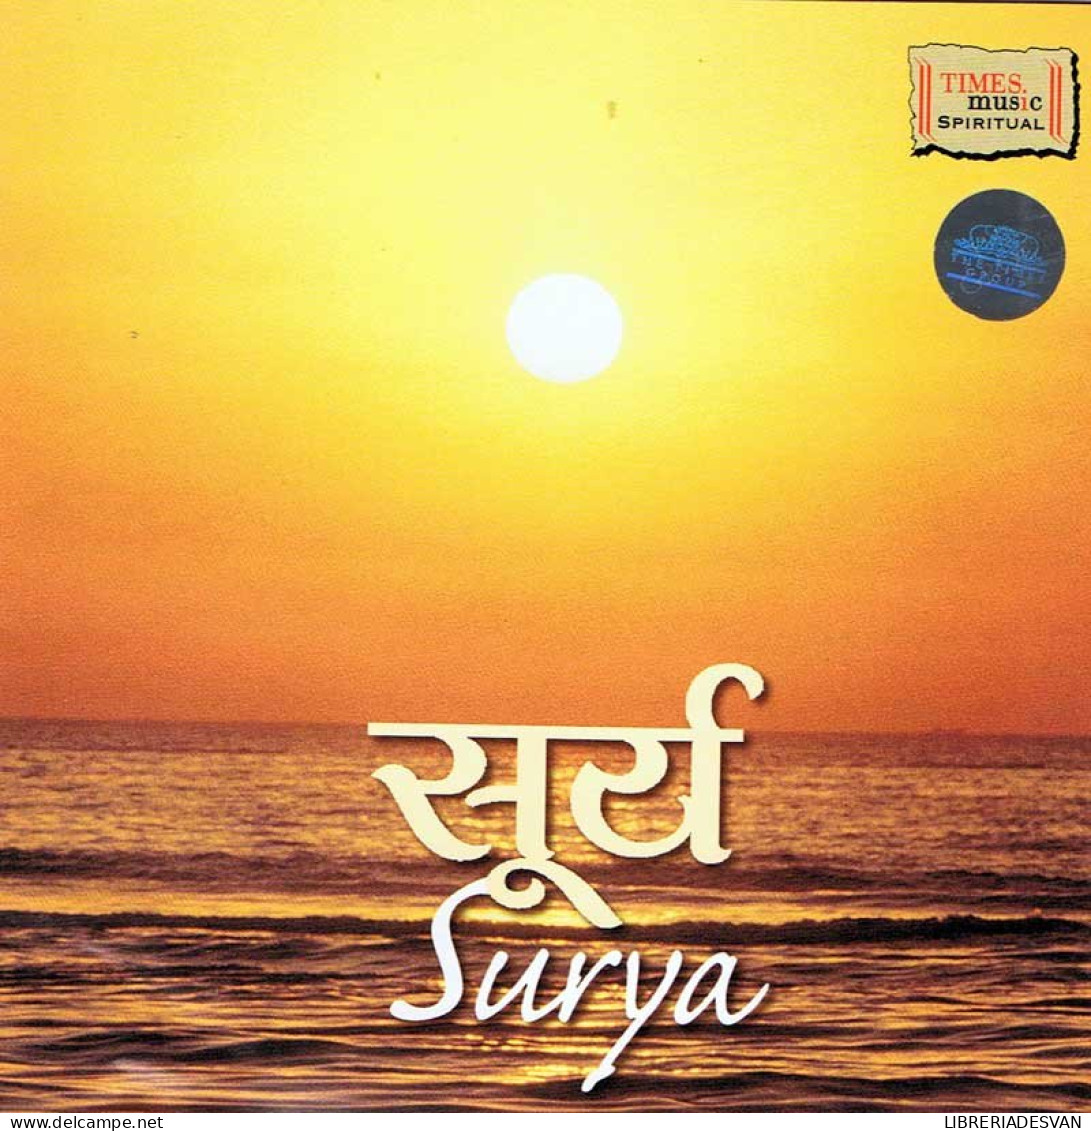 Surya. CD - New Age